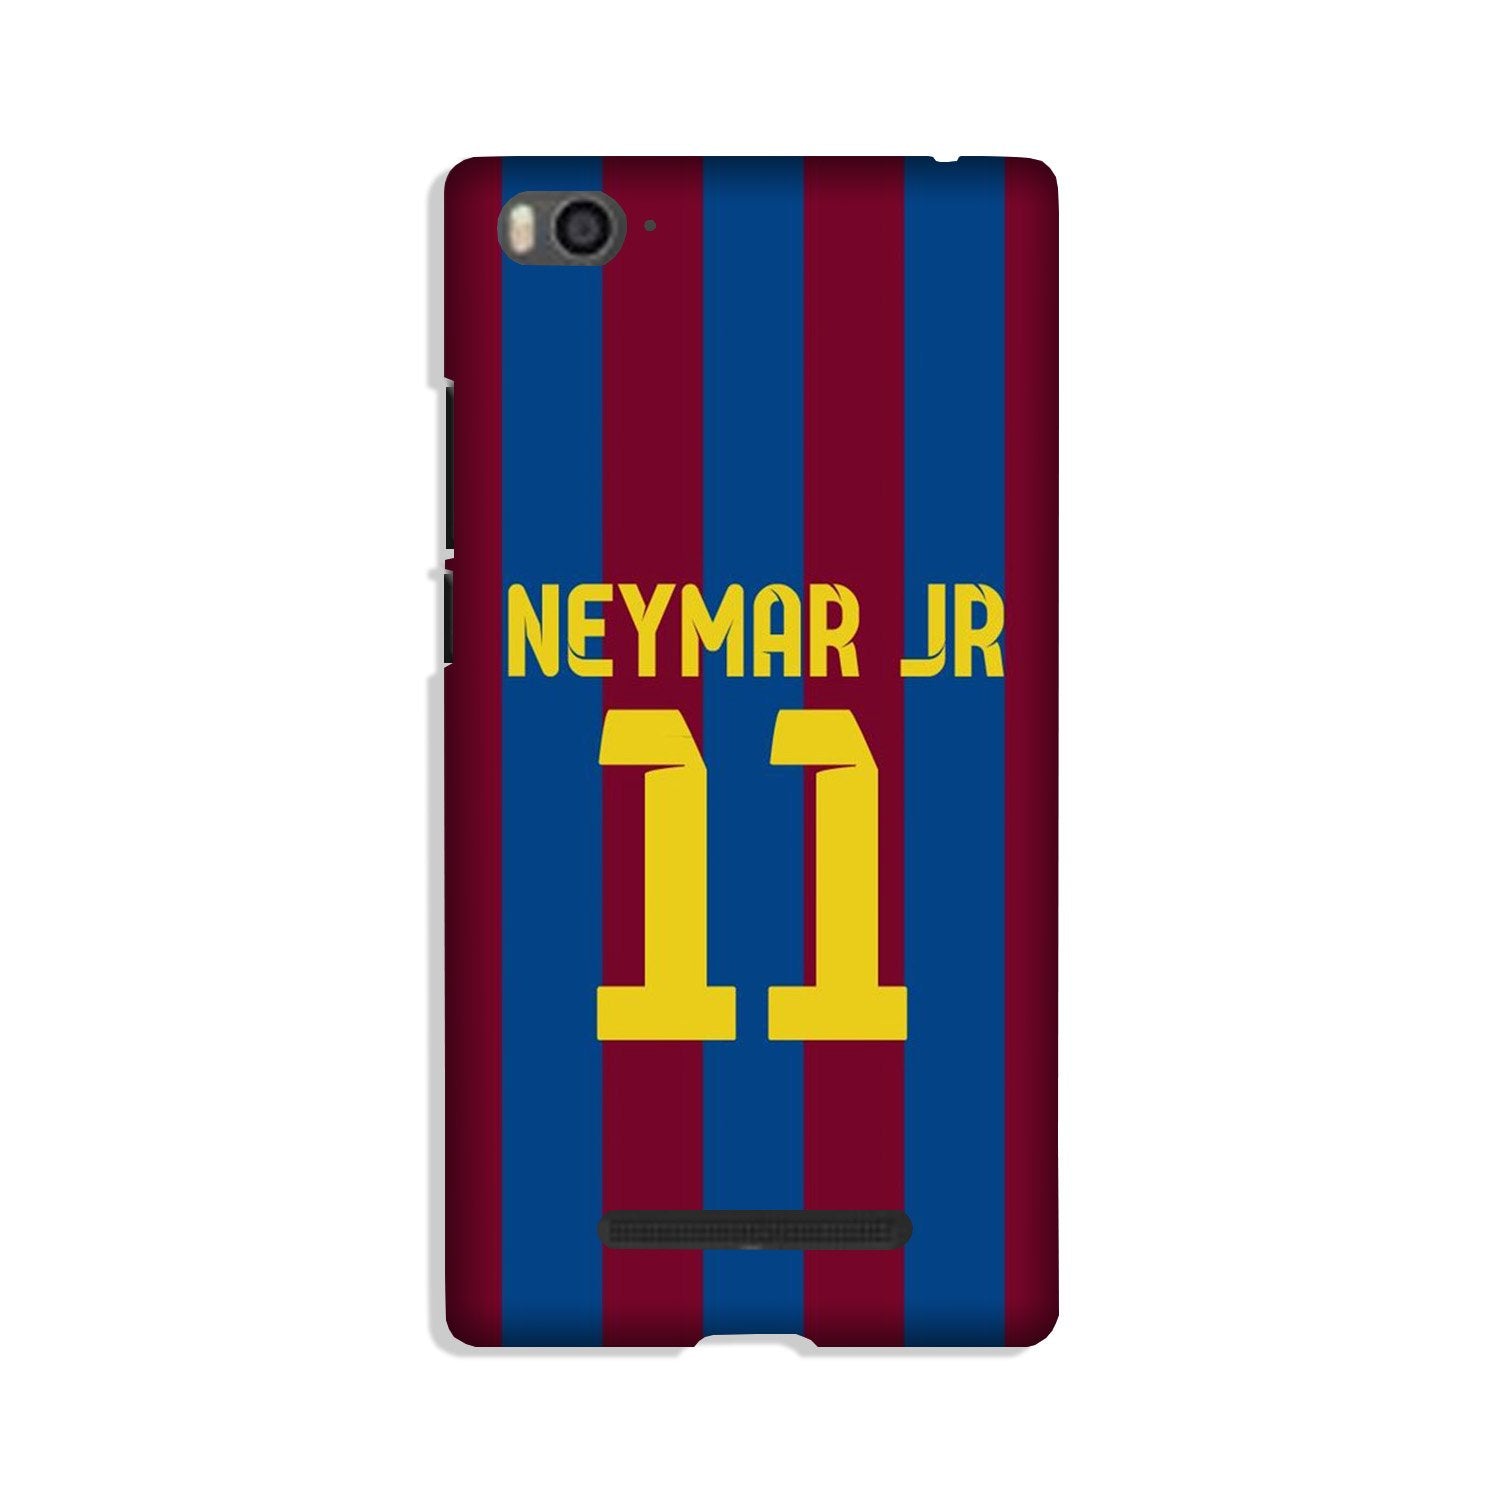 Neymar Jr Case for Xiaomi Redmi 5A(Design - 162)